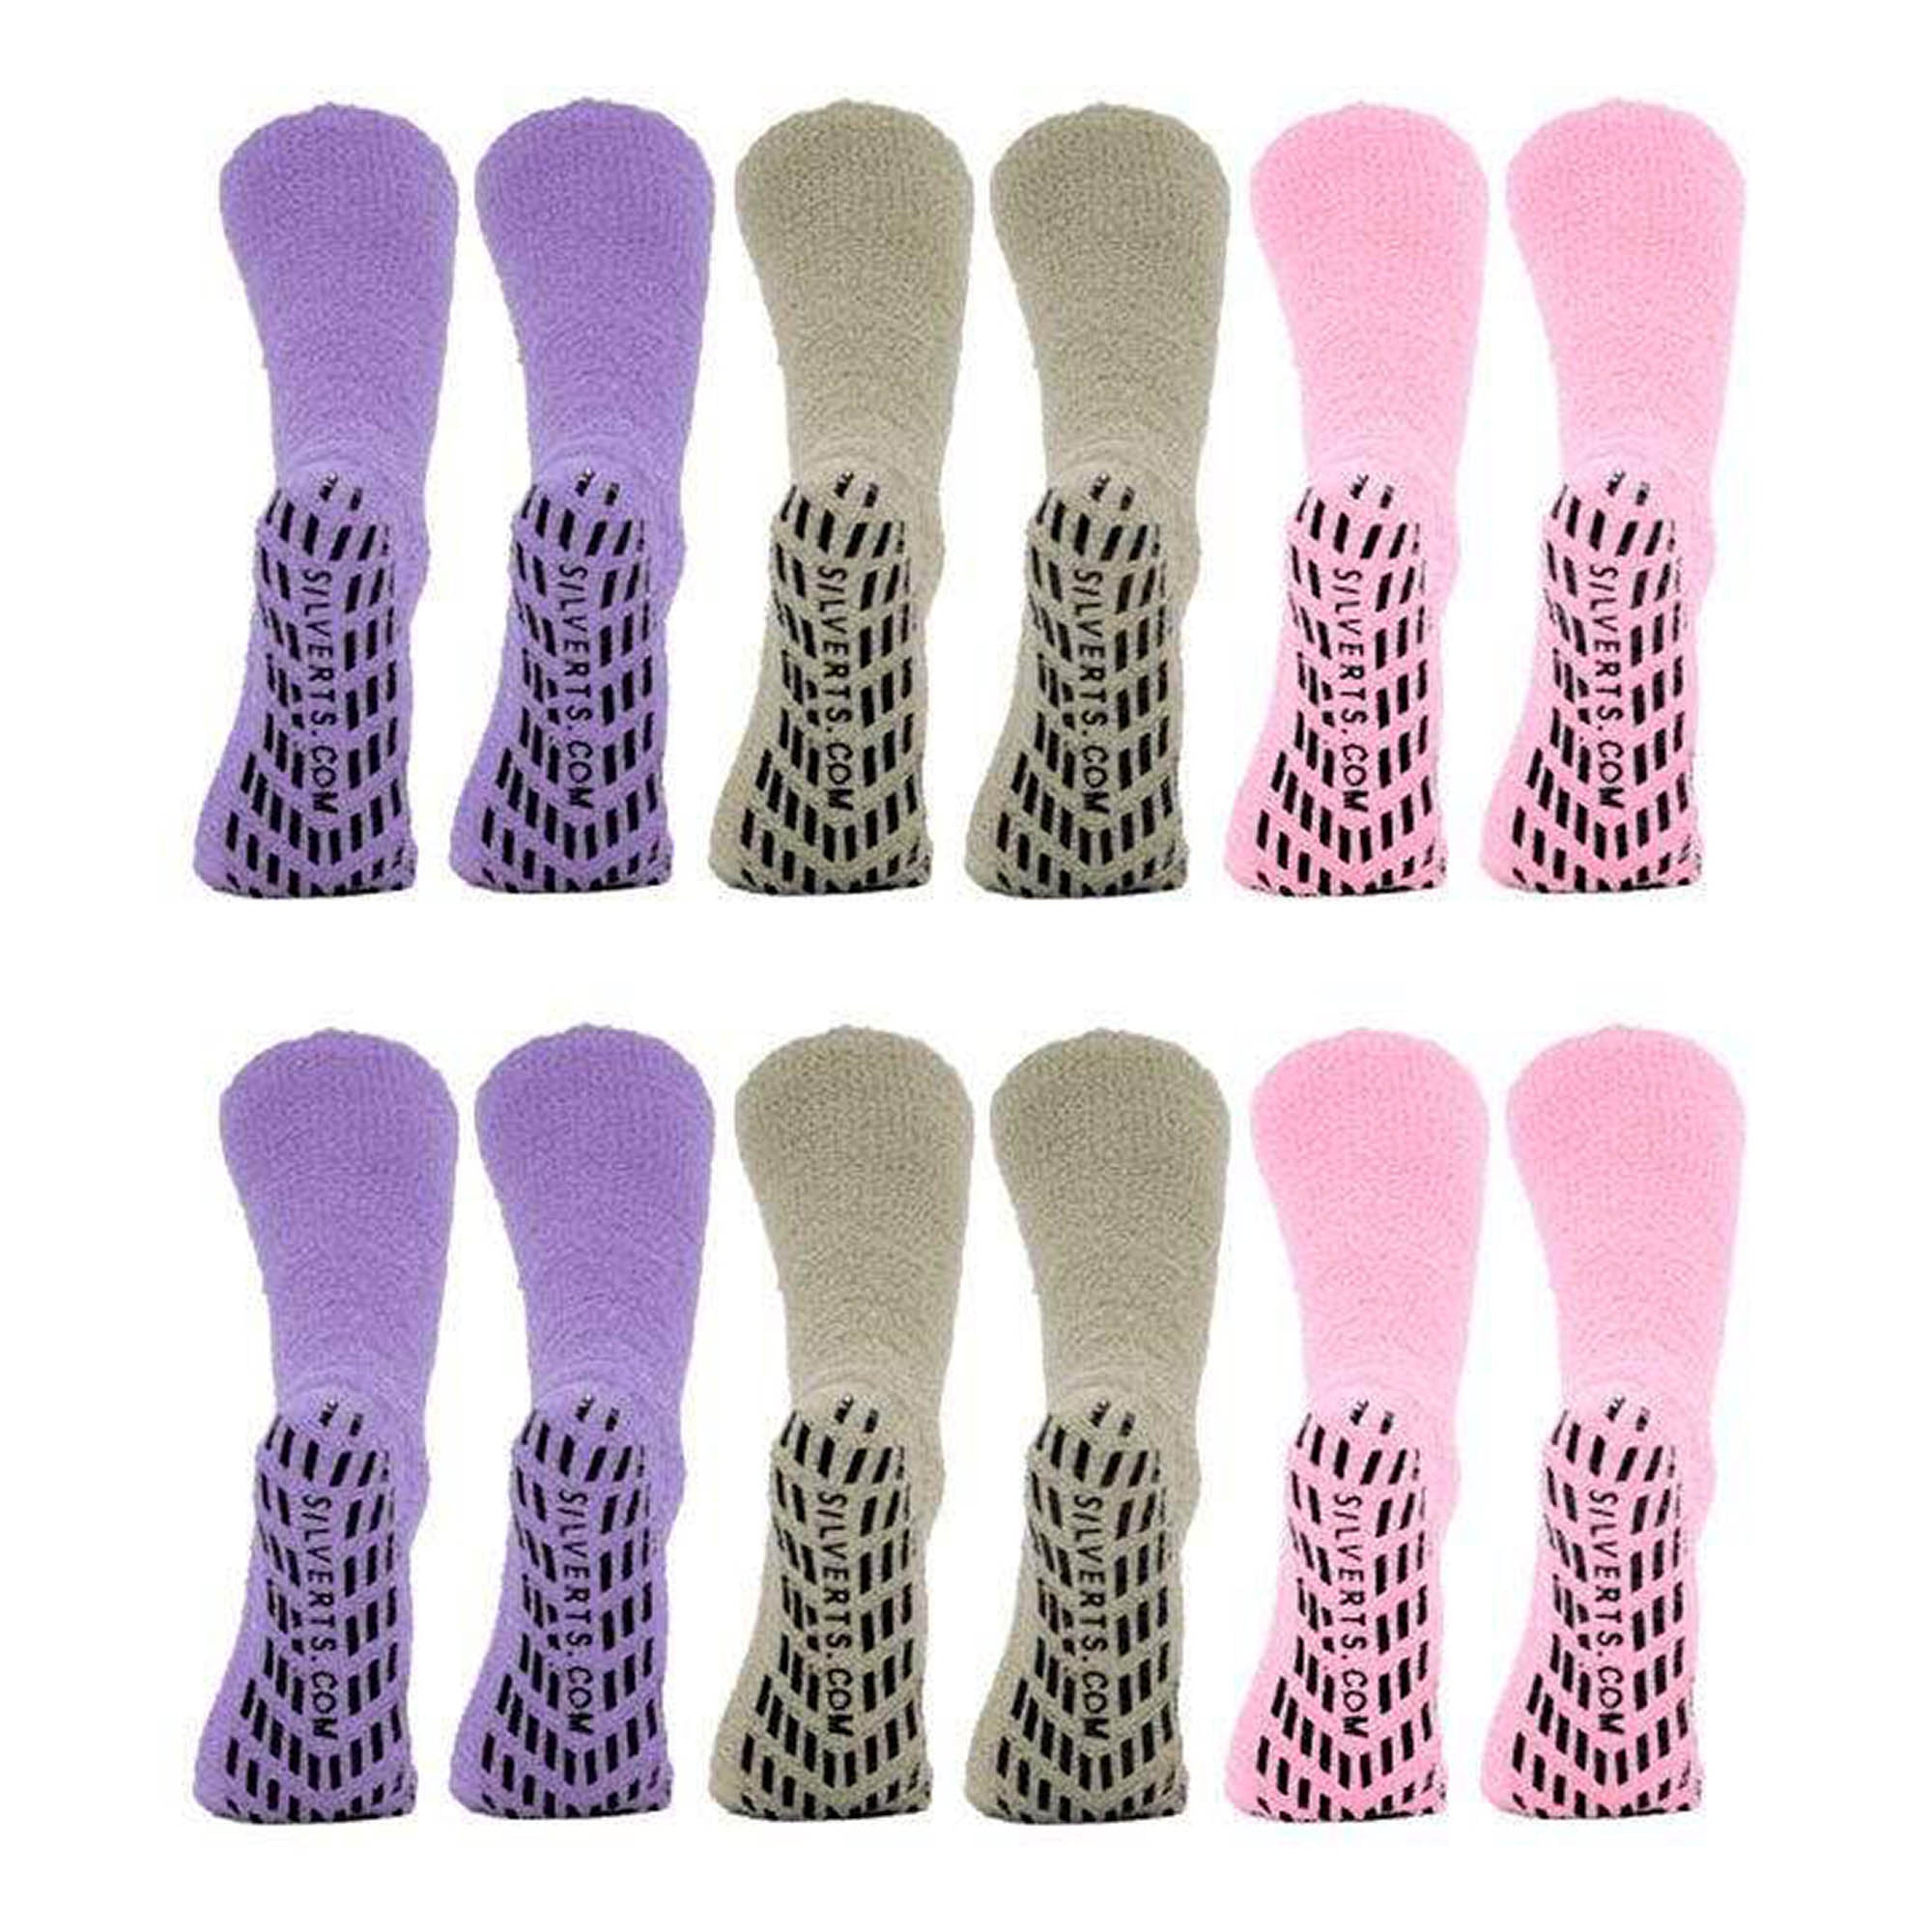 Silverts Slipper Socks - Set Of 6 - Pastel Pack - XL